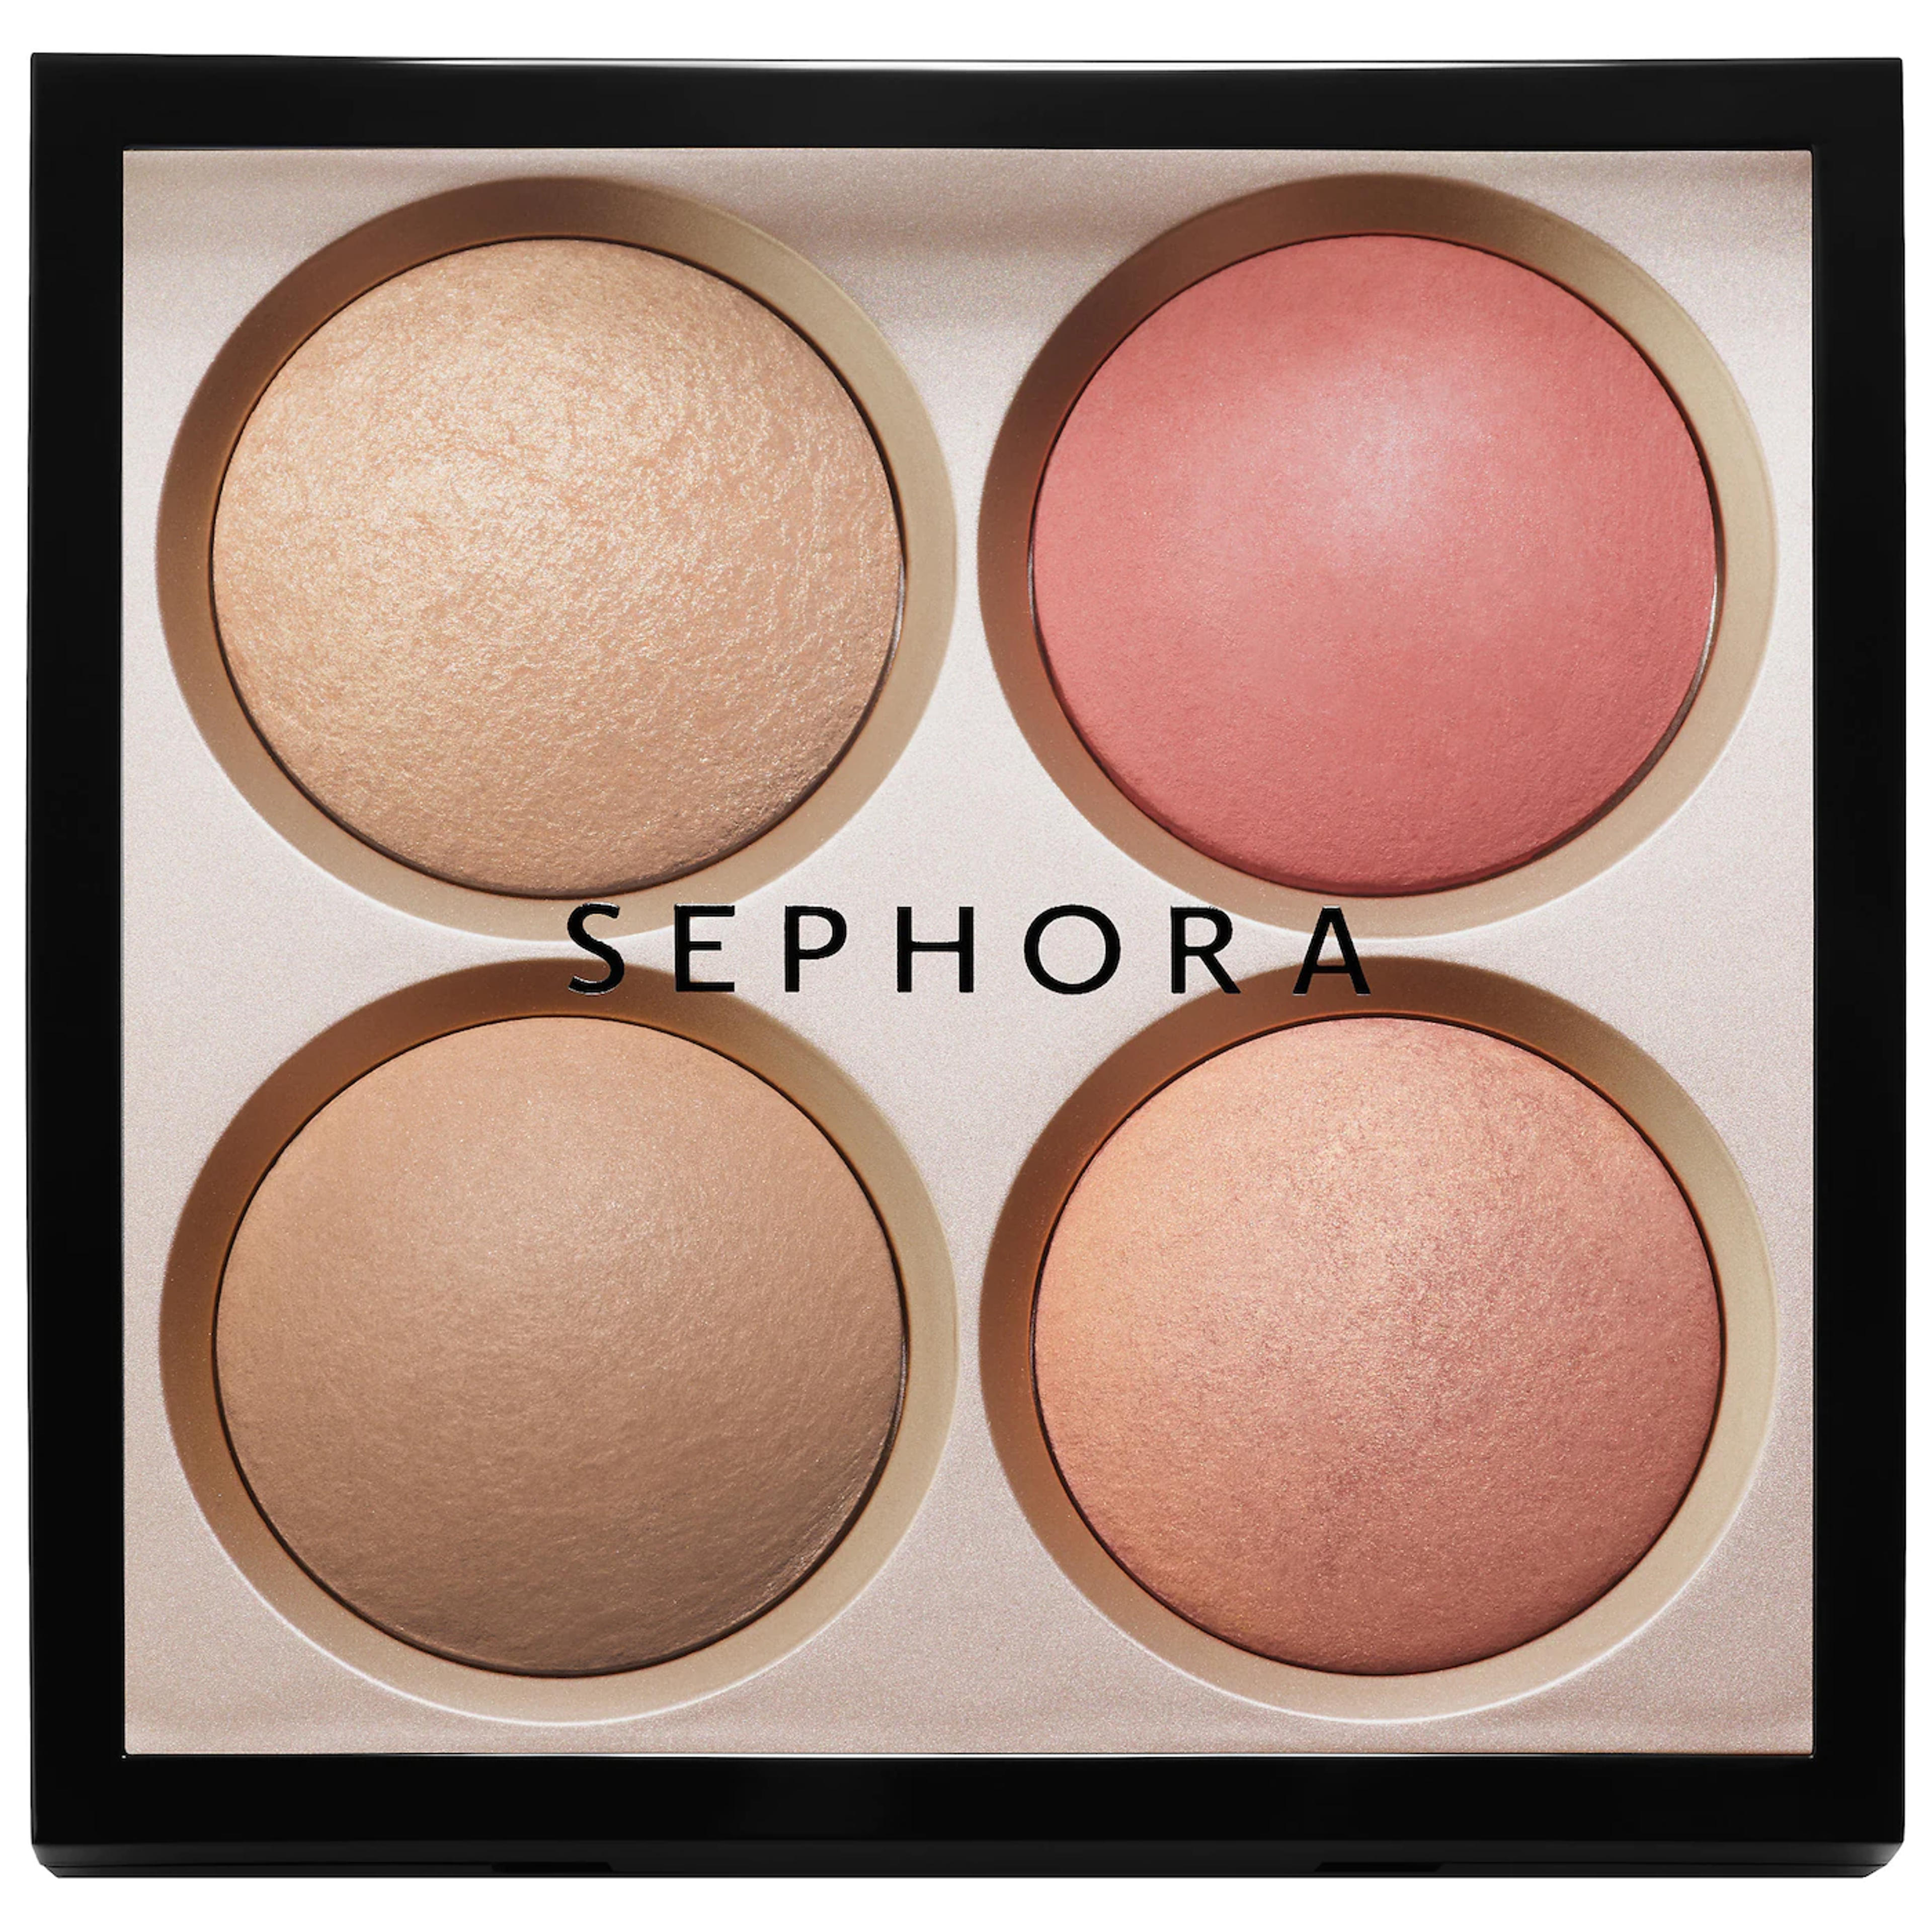 Microsmooth Multi-Tasking Baked Face Palette - SEPHORA COLLECTION | Sephora